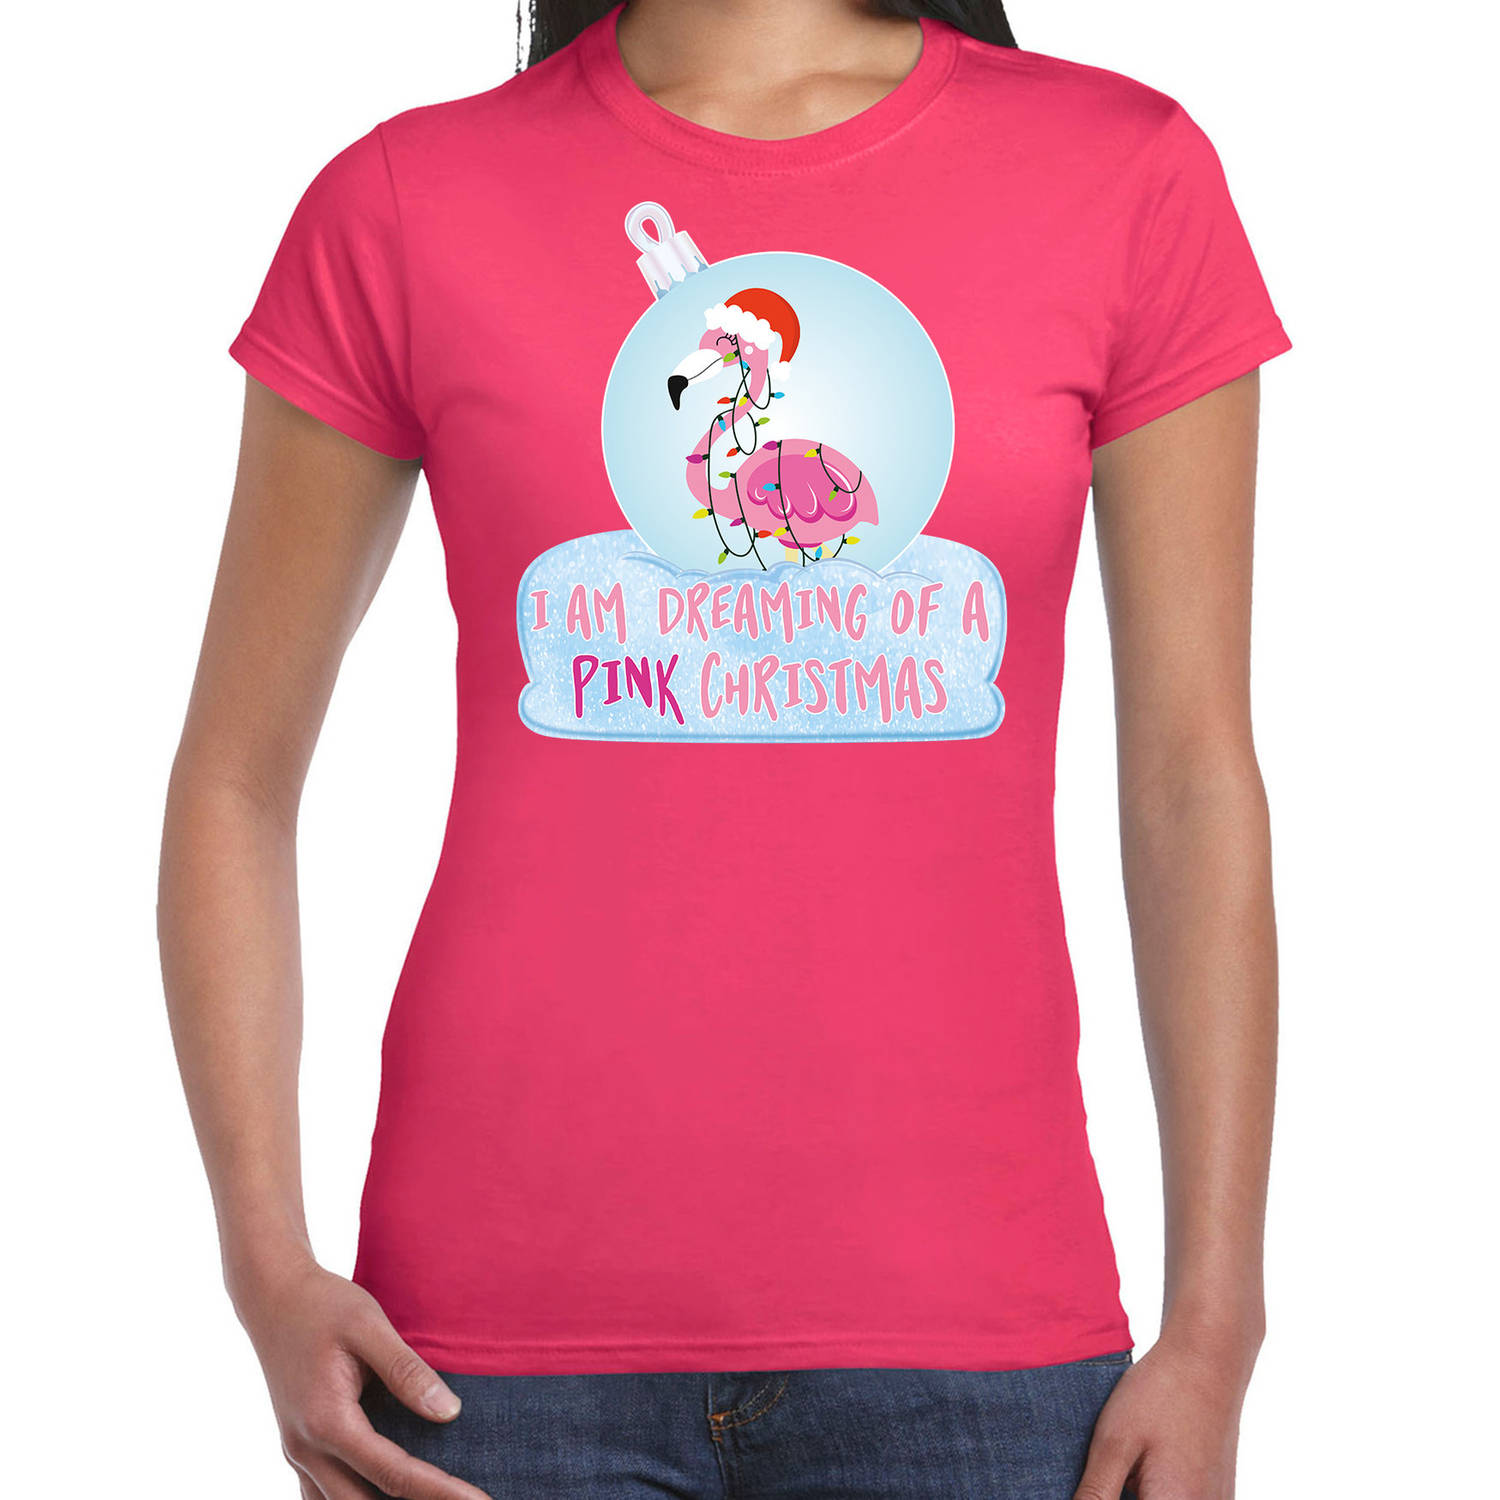 Roze Kerstshirt / Kerstkleding I am dreaming of a pink Christmas voor dames met flamingo kerstbal L - kerst t-shirts